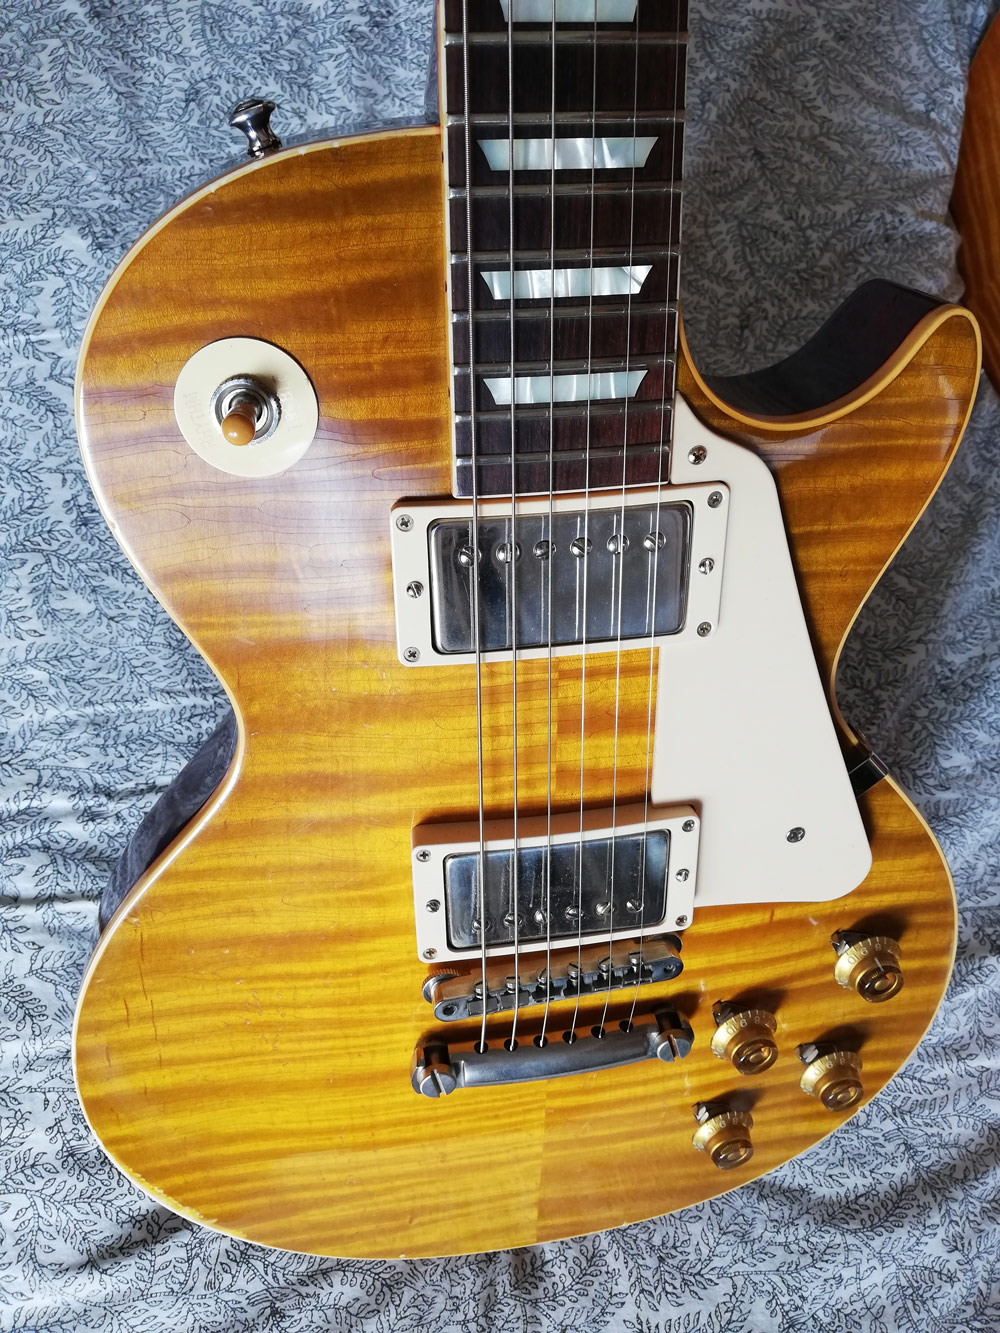 Gibson Les Paul 1959 Reissue true historic murphy aged